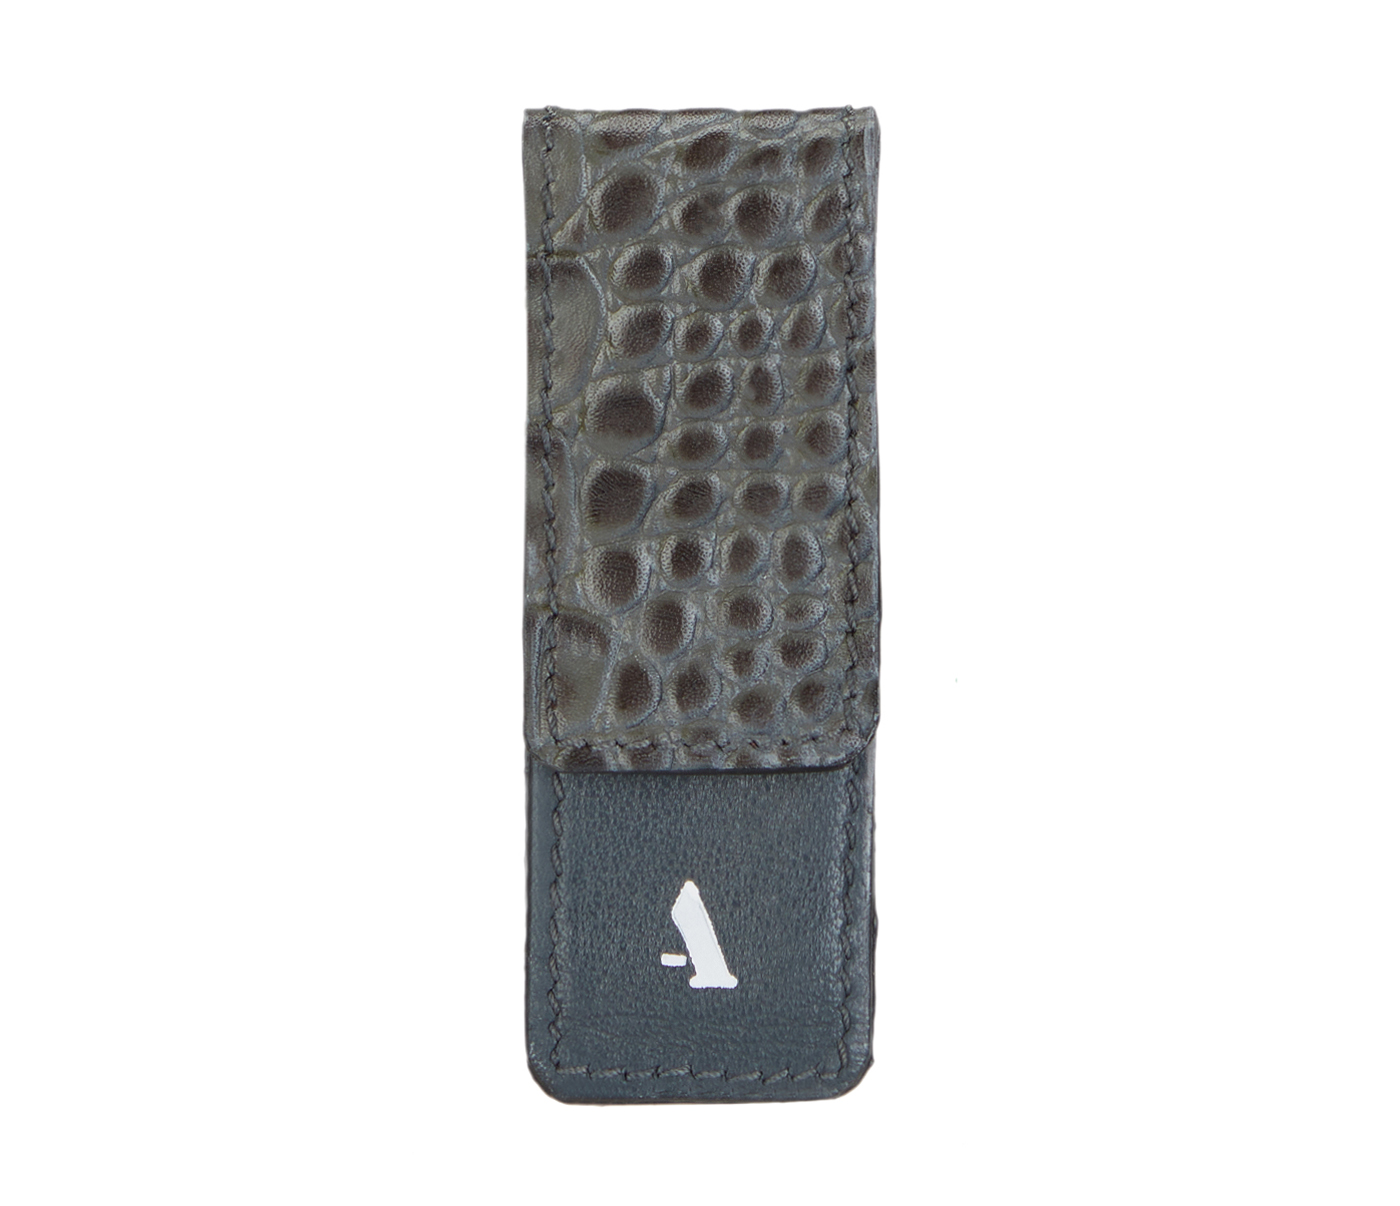  Leather Money Clip(Grey)W336